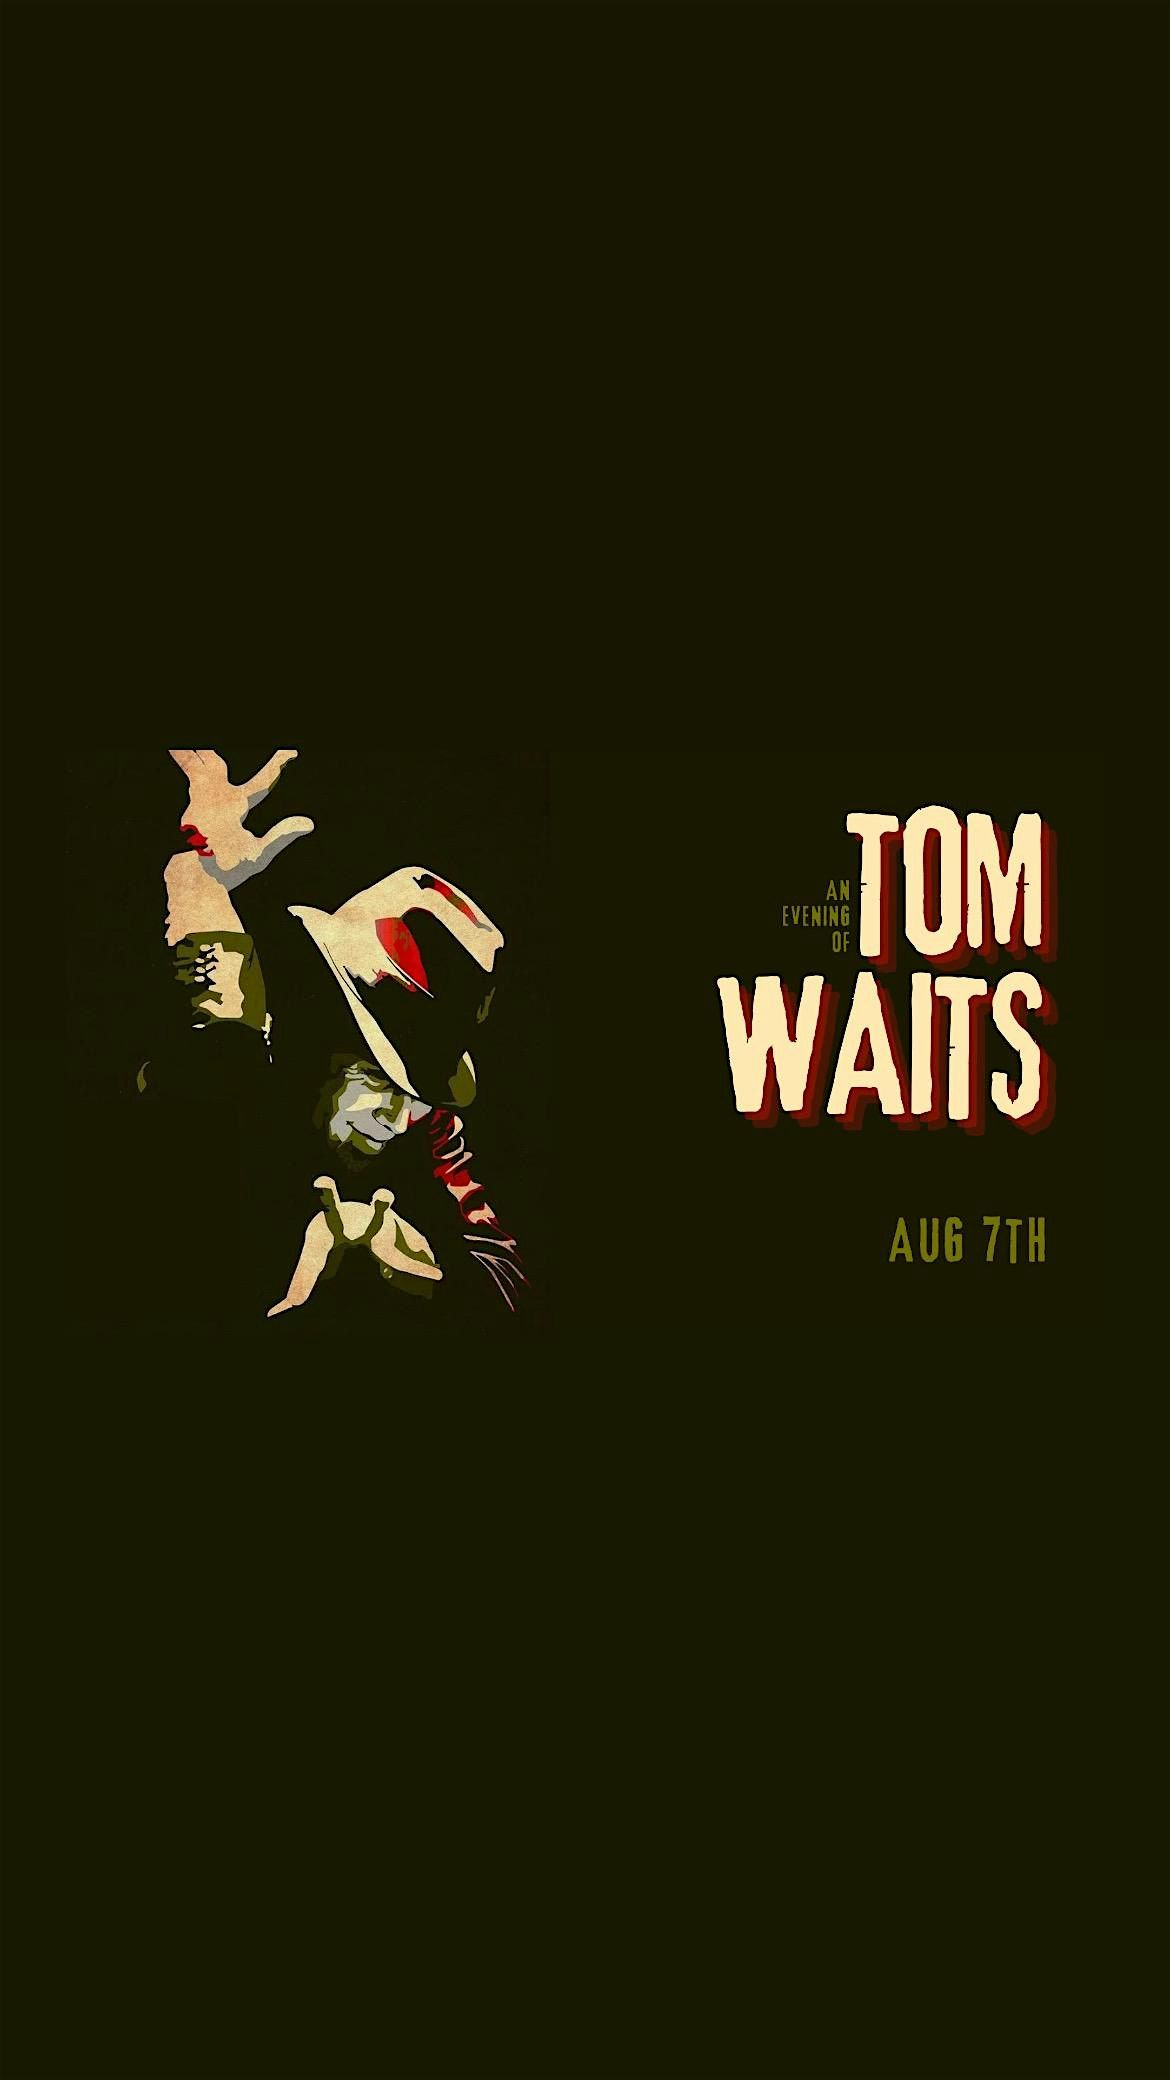 An Evening of Tom Waits